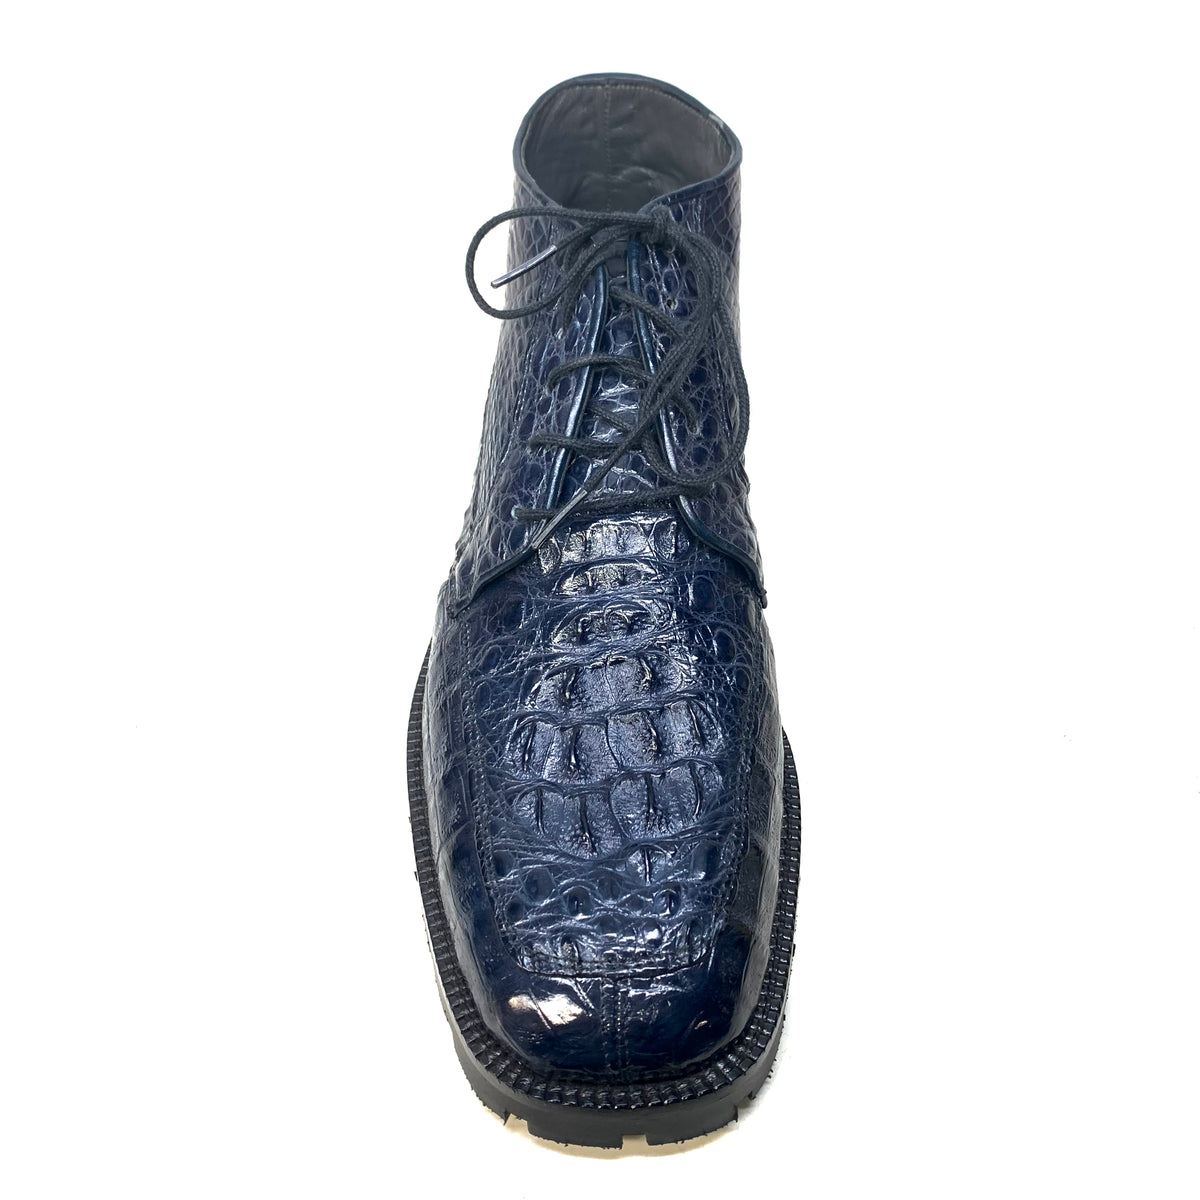 Los Altos Navy Hornback All-Over Crocodile Lace Up Ankle Boots - Dudes Boutique